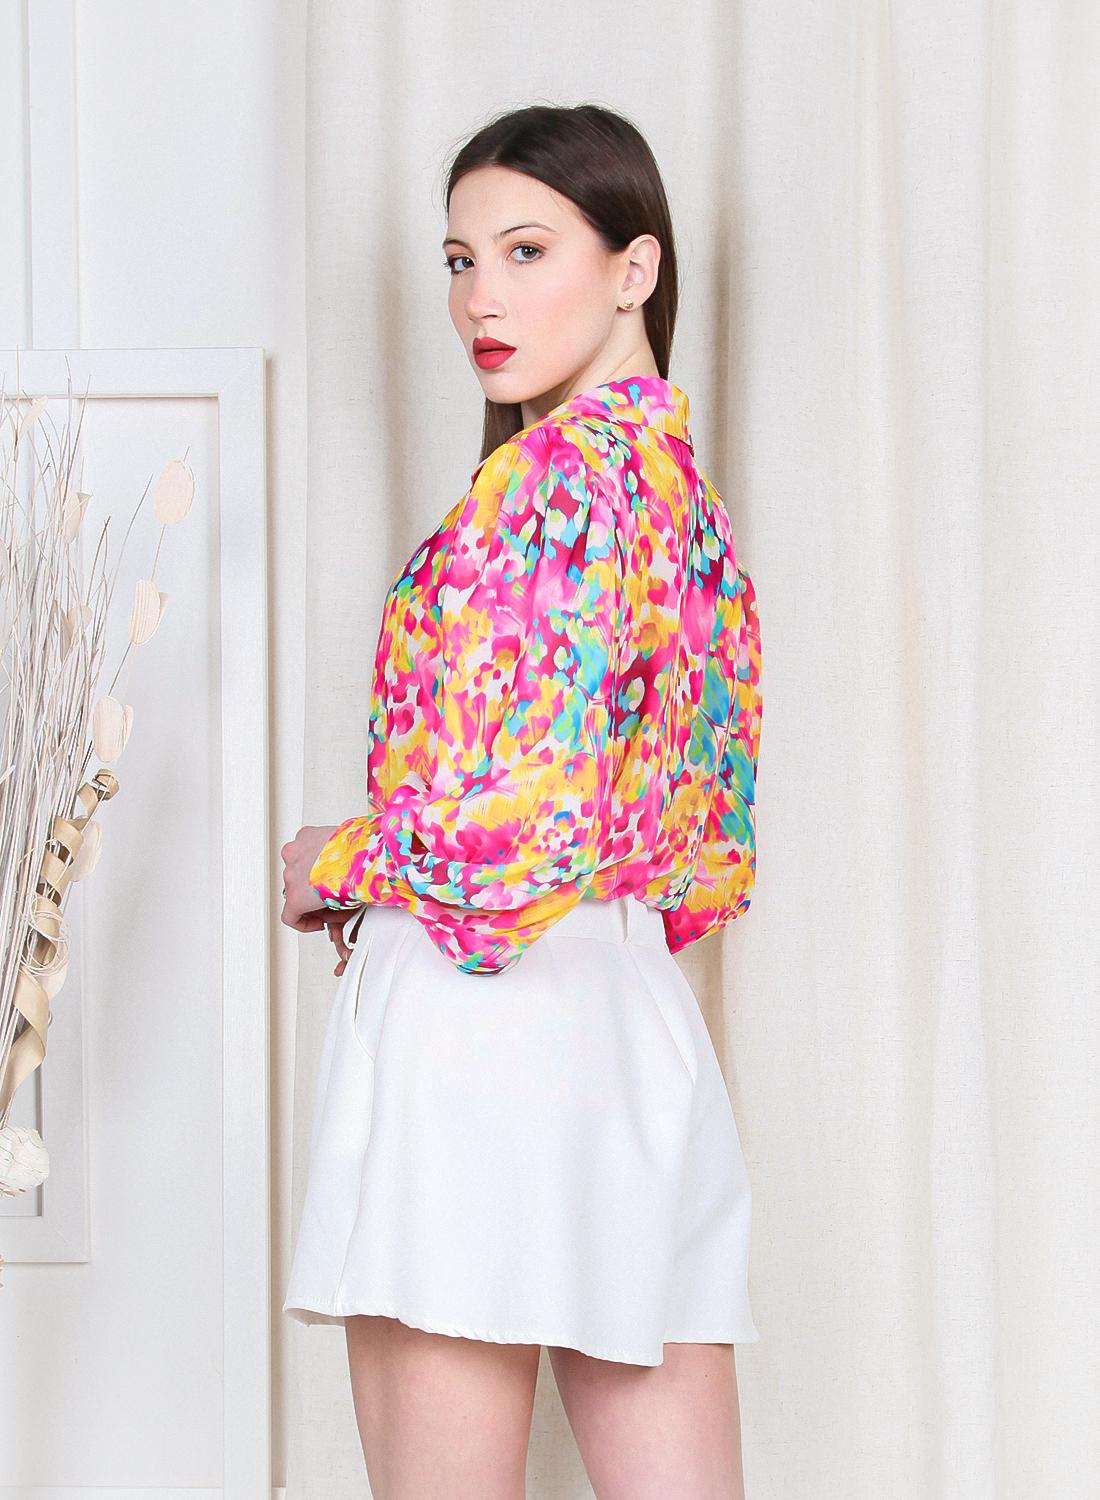 
                  
                    Camicia Donna Morbida Bottoni Fantasia Floreale Multicolore Casual Elegante - LE STYLE DE PARIS
                  
                